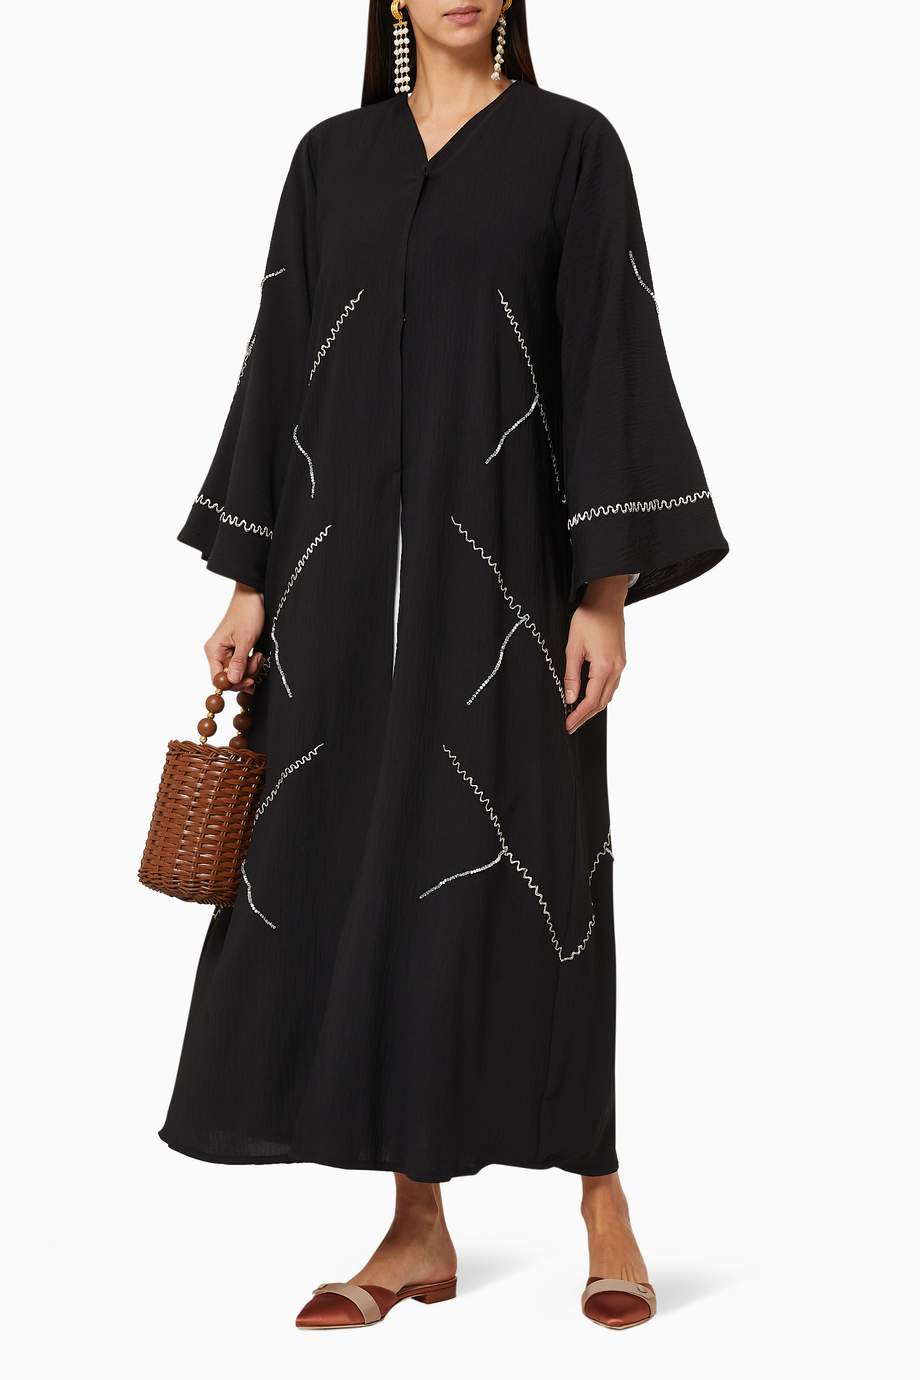 Shop Barza Black Embroidered Crinkled Crepe Abaya for Women | Ounass UAE